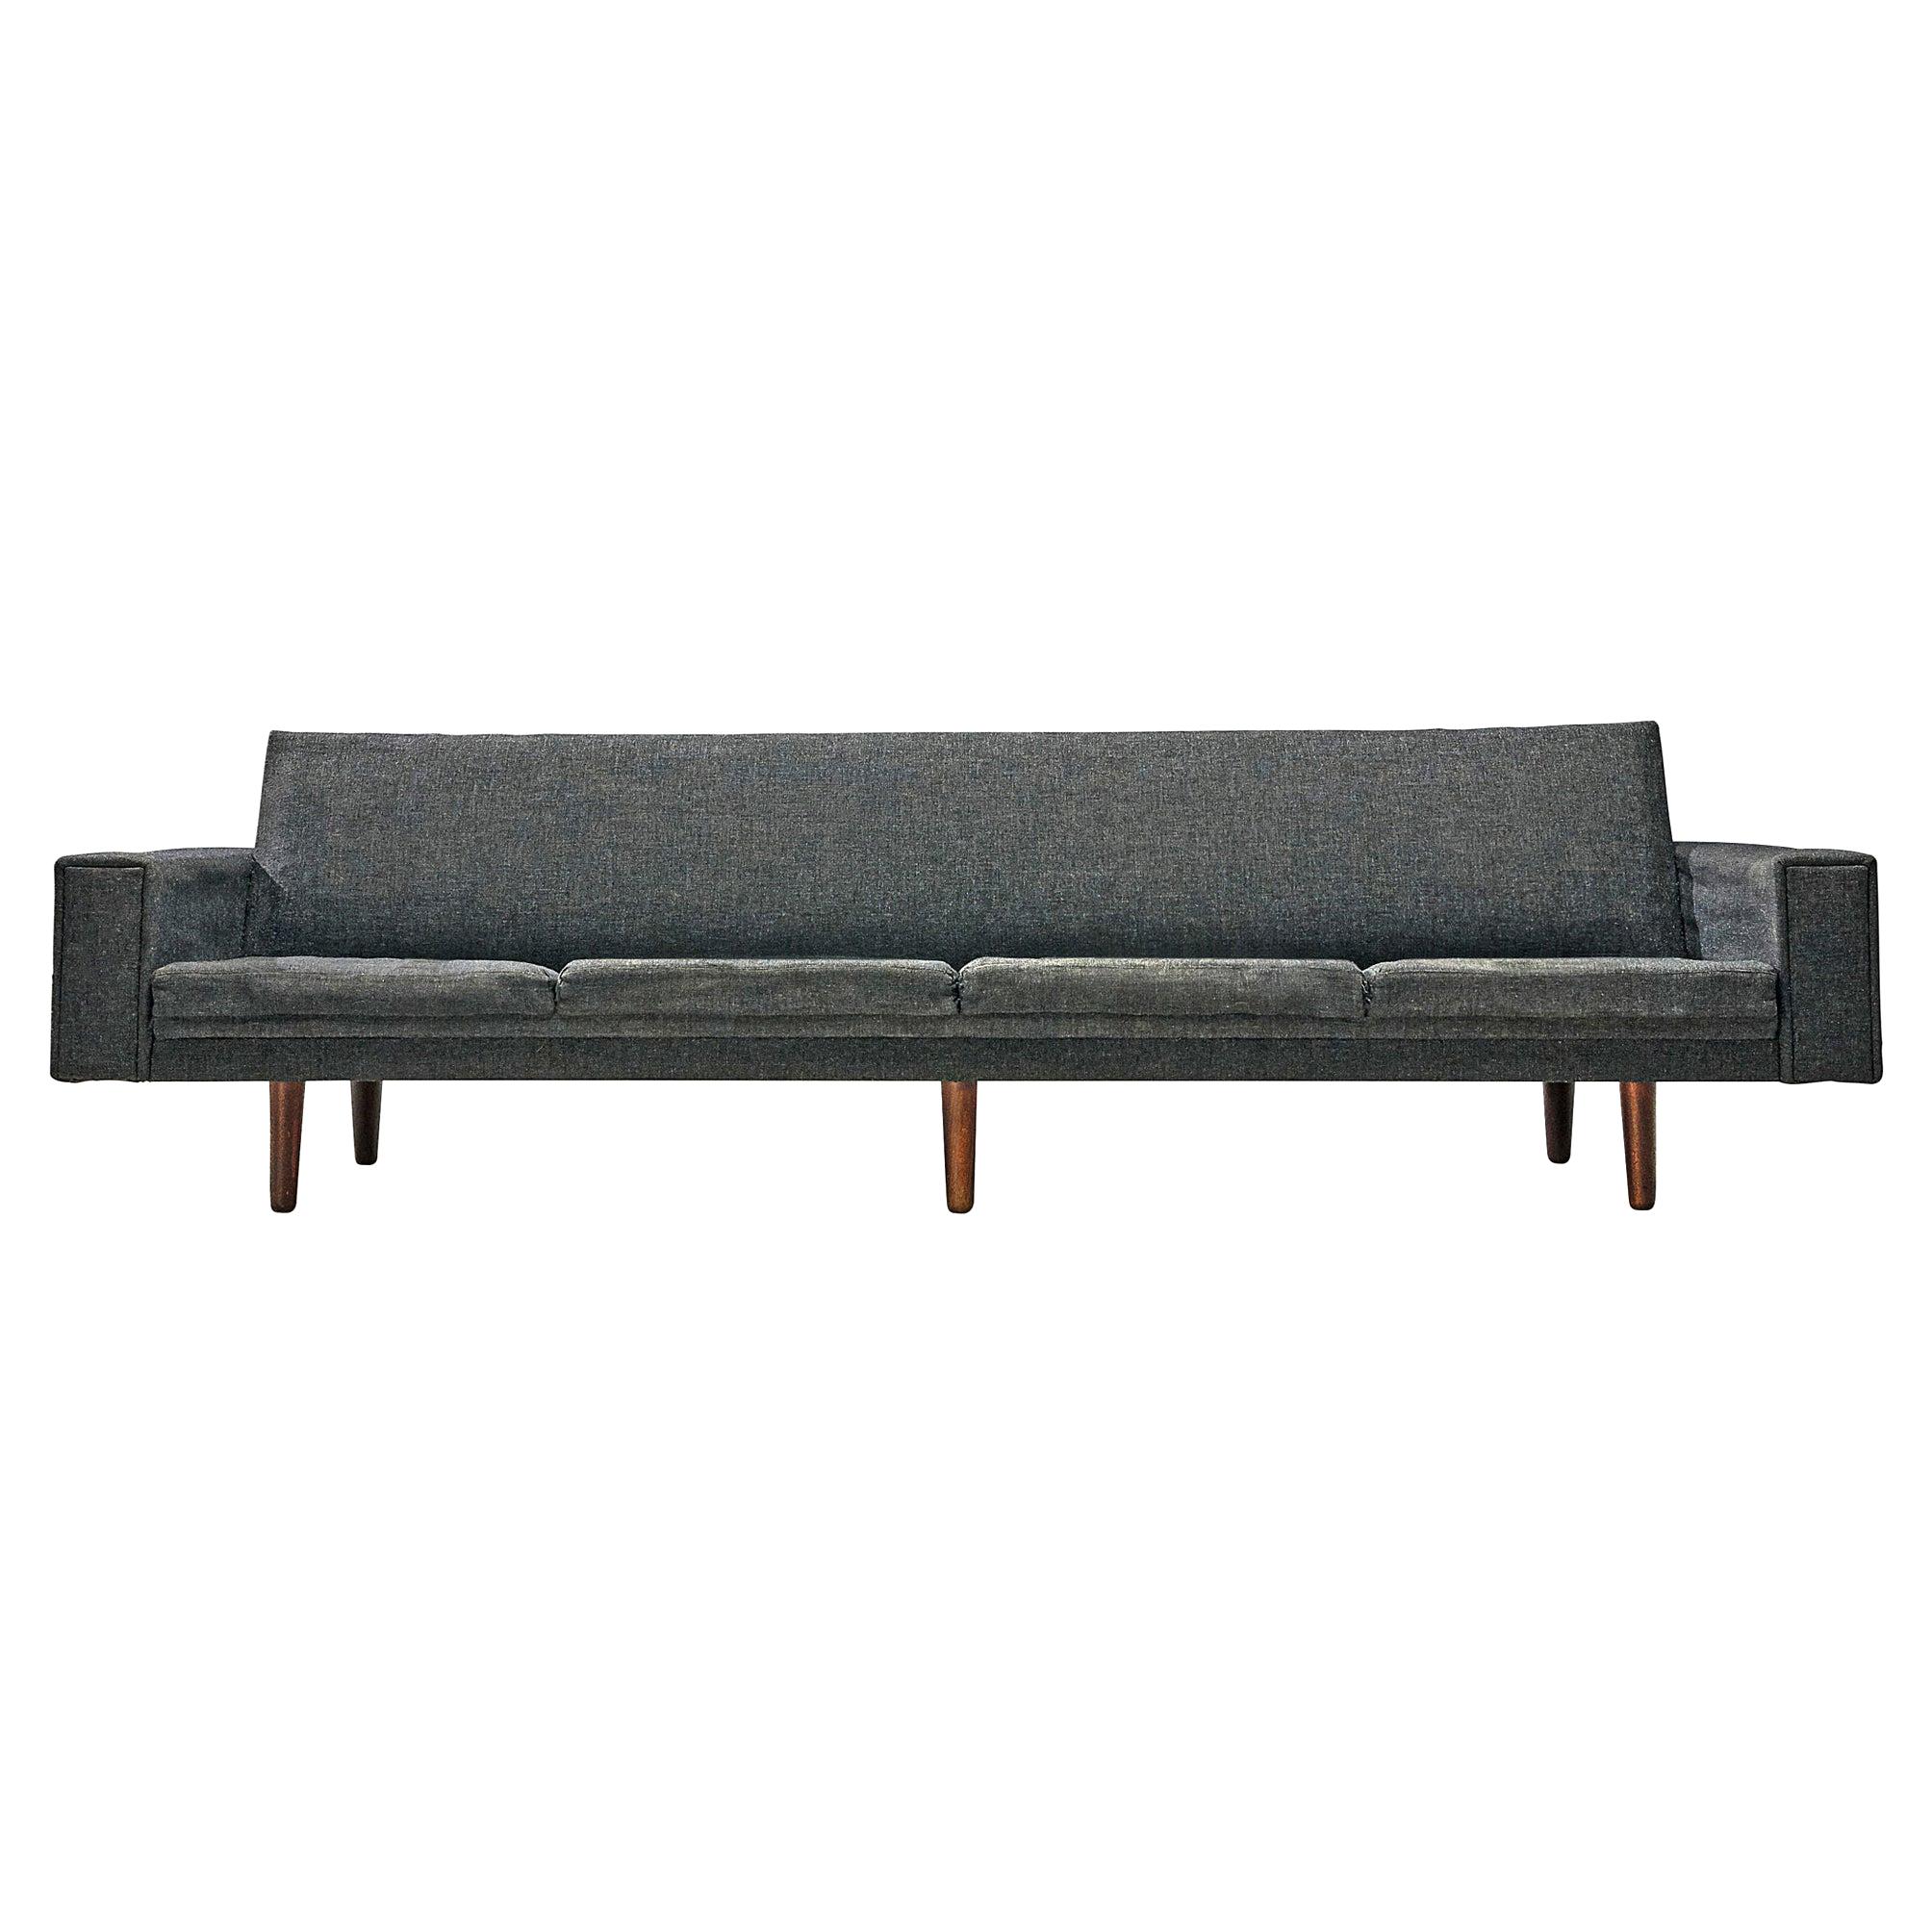 Danish Four-Seat Sofa in Dark Grey Upholstery